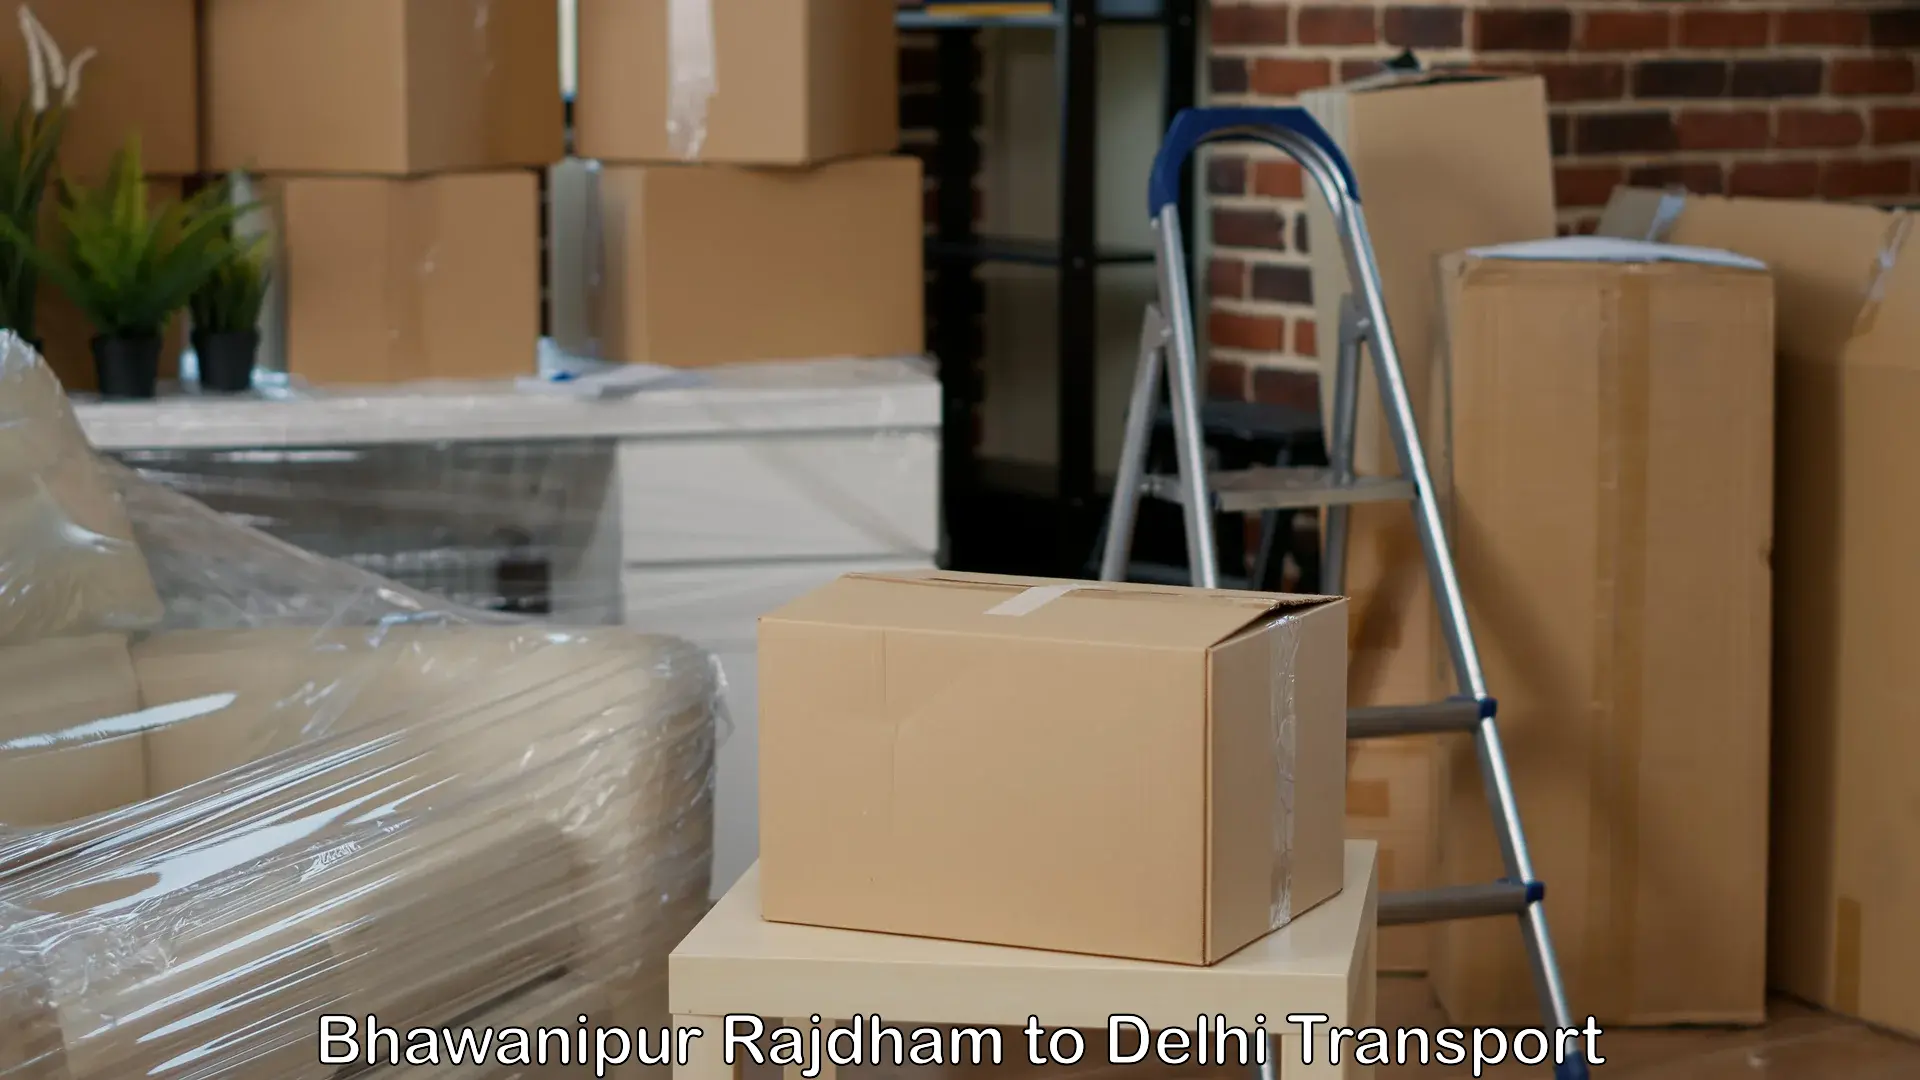 Container transport service Bhawanipur Rajdham to IIT Delhi